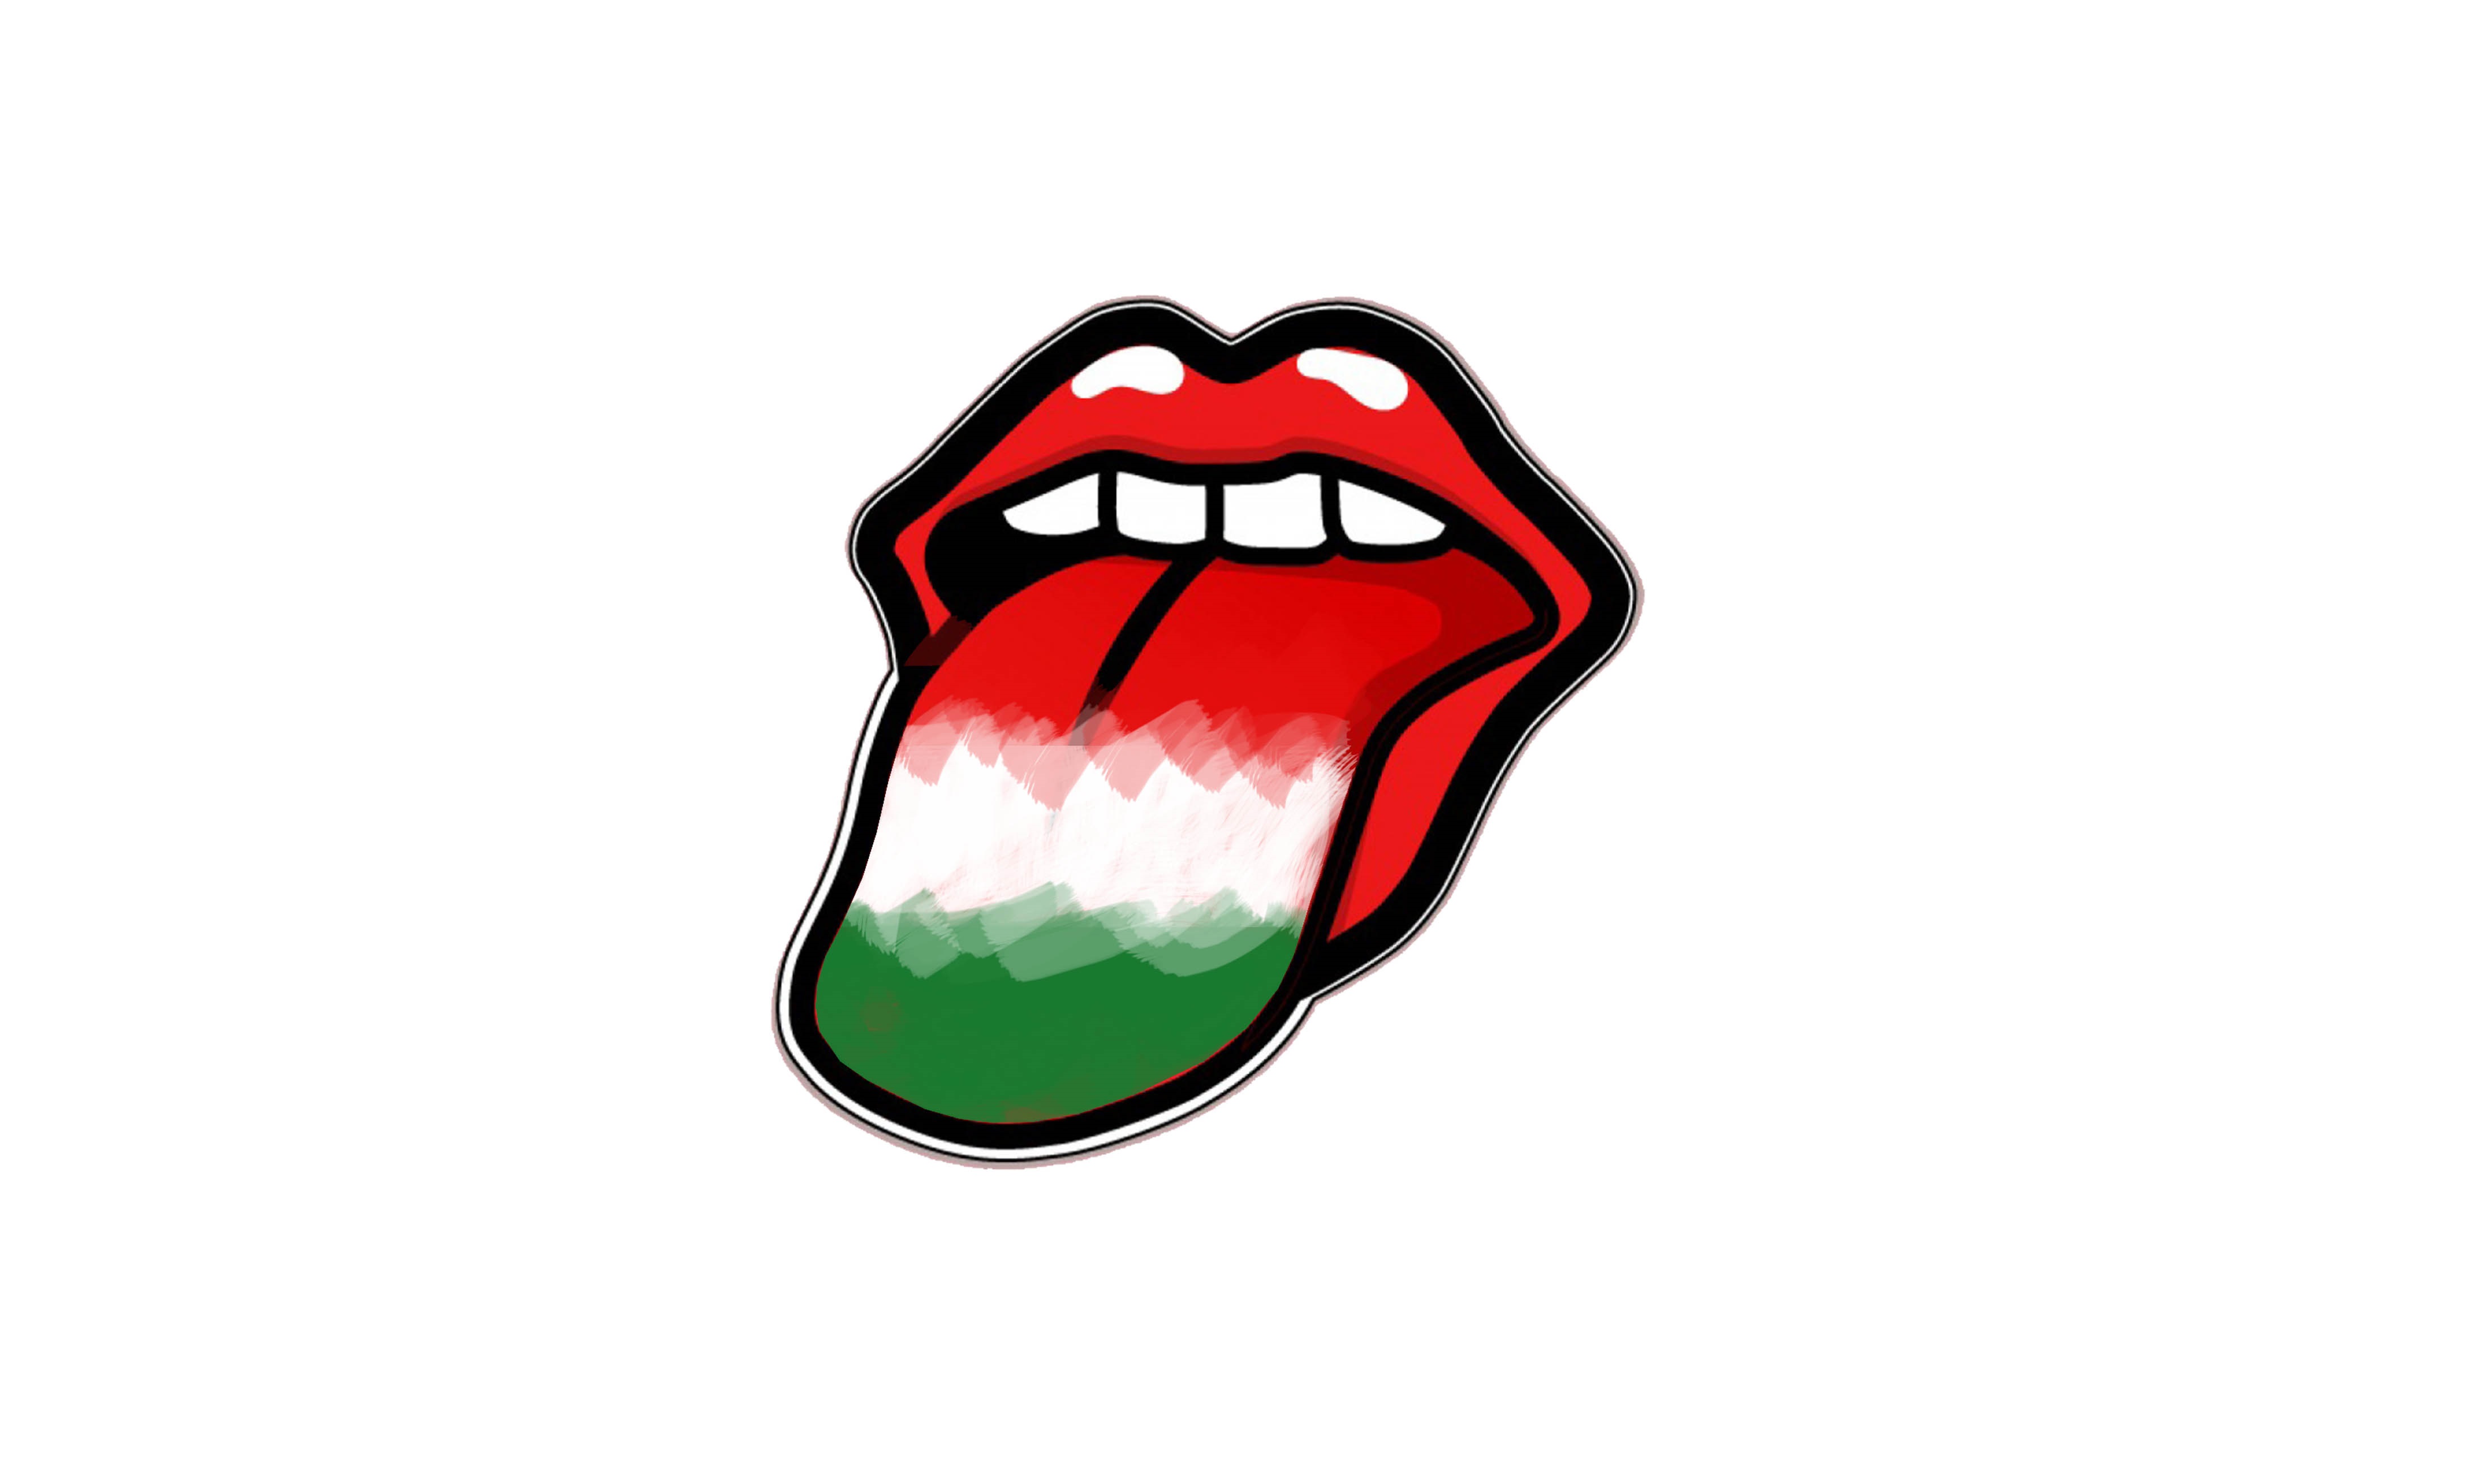 mađarska zastava jezik jezik